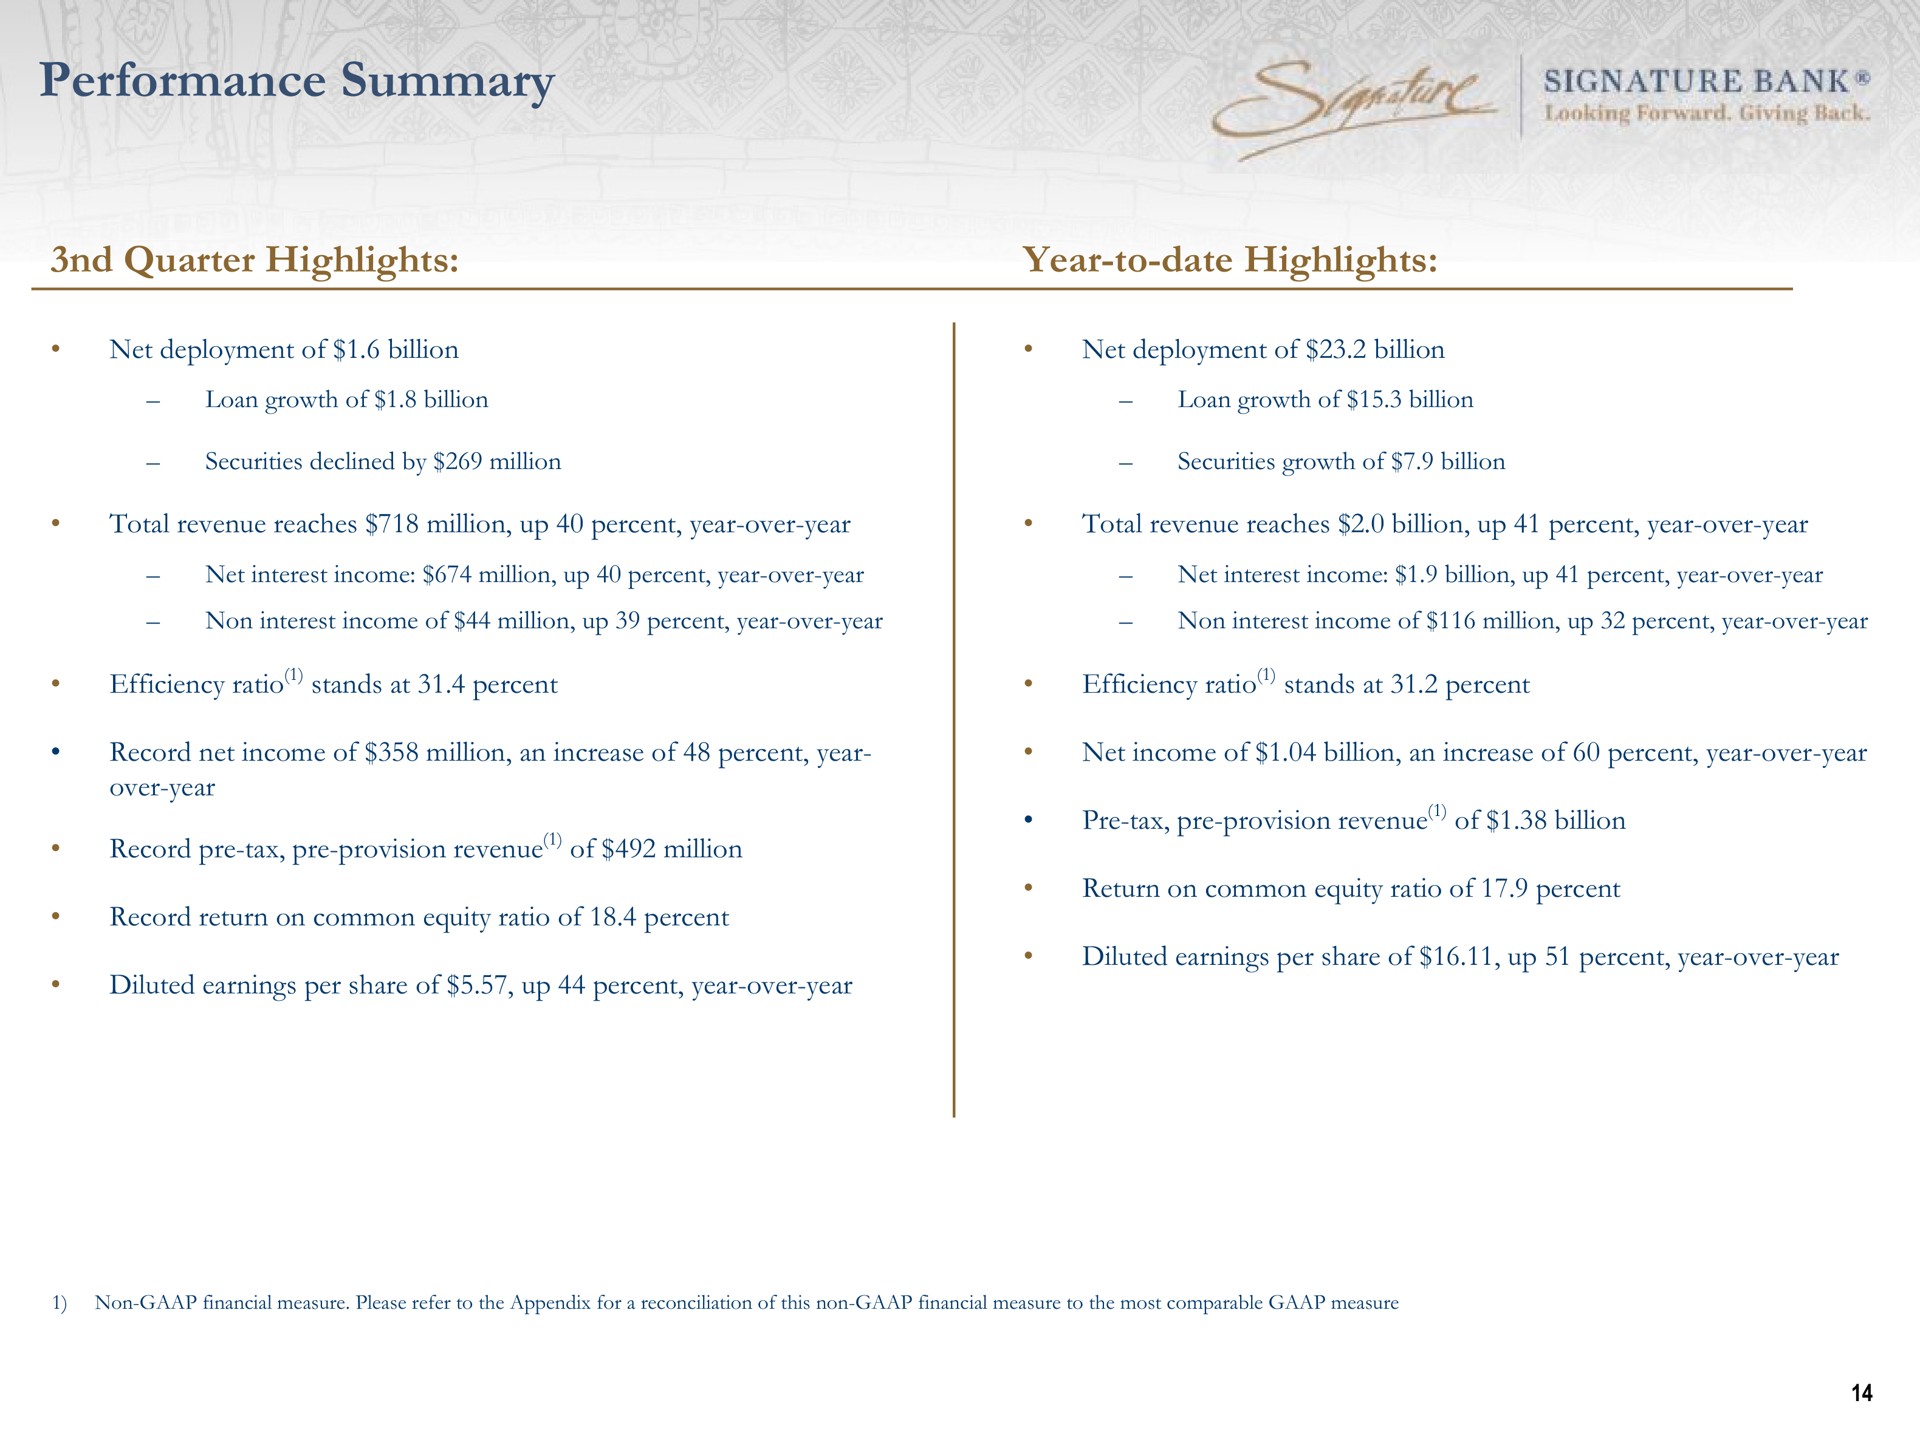 performance summary signature bank quarter highlights year to date highlights | Signature Bank